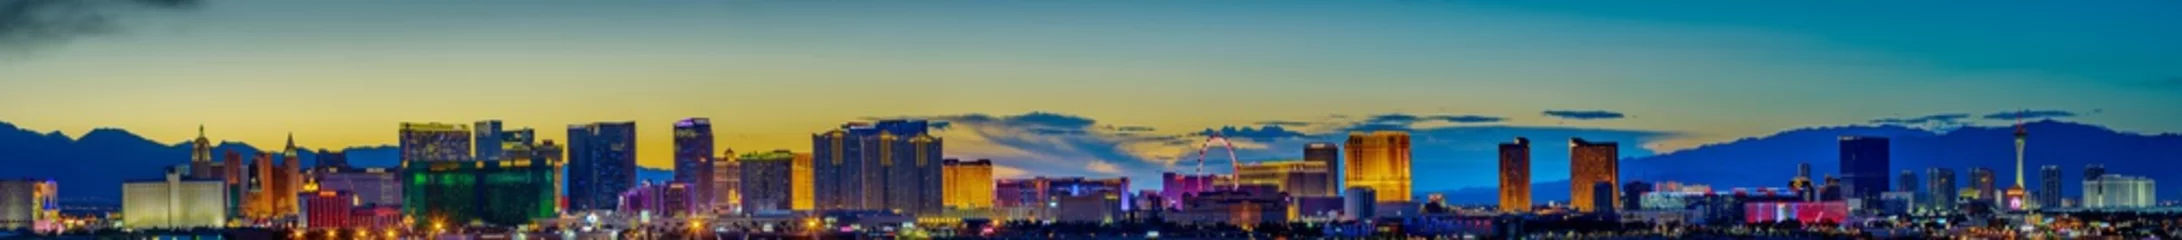 Foto auf Alu-Dibond Skyline-Blick bei Sonnenuntergang des berühmten Las Vegas Strip in Weltklasse-Hotels und Casinos, NV © yooranpark